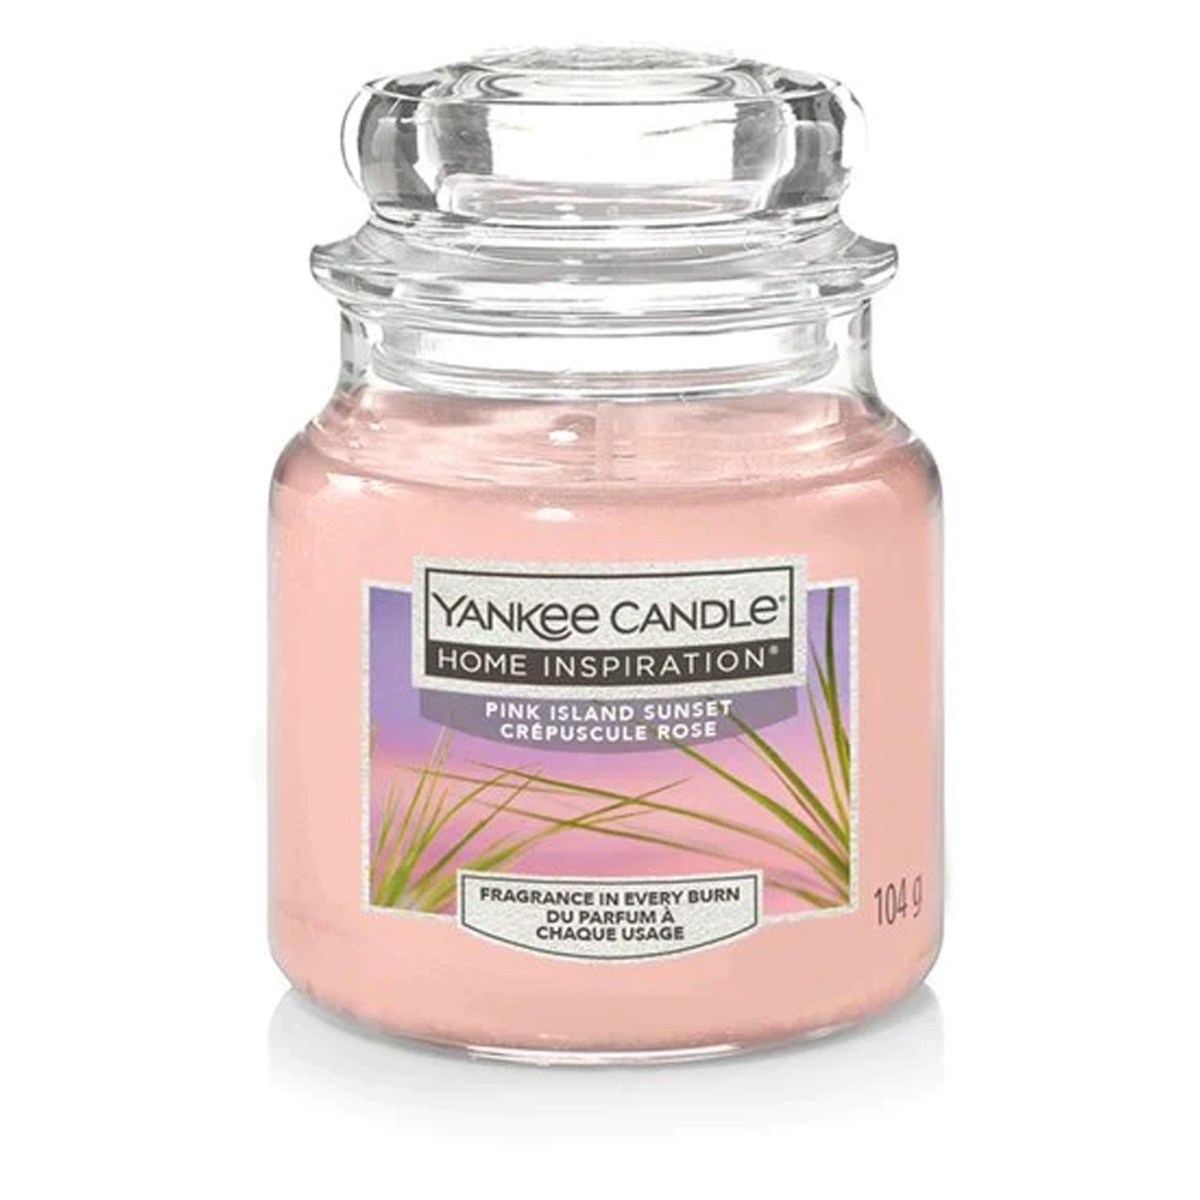 Yankee Candle Home Inspiration Small Jar - Pink Island Sunset>